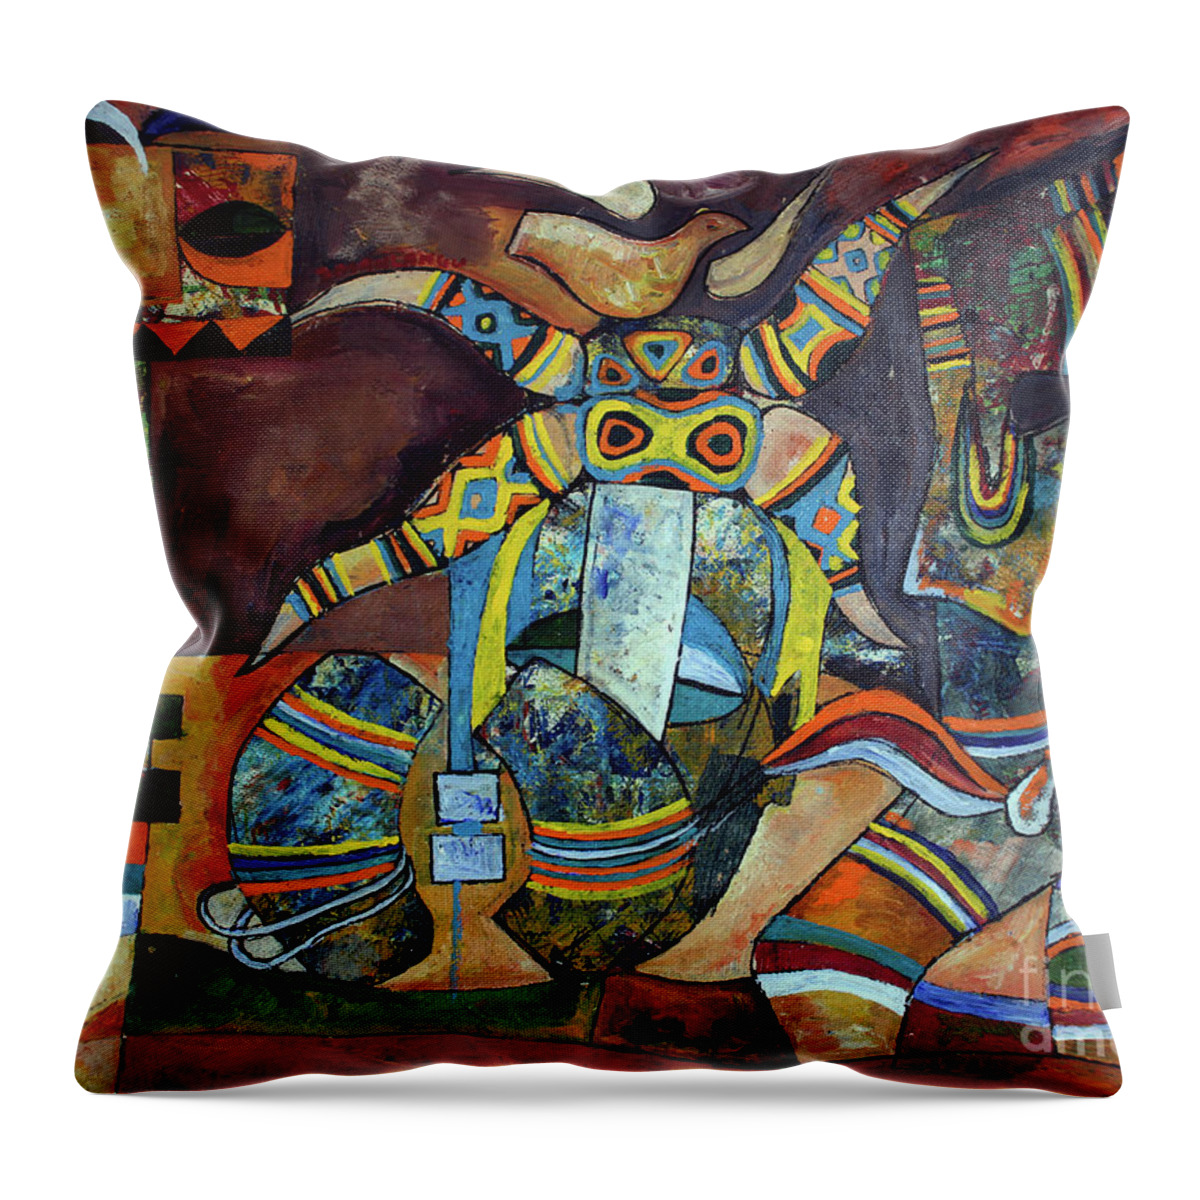 Speelman Mahlangu Throw Pillow featuring the painting Riksha Man by Speelman Mahlangu